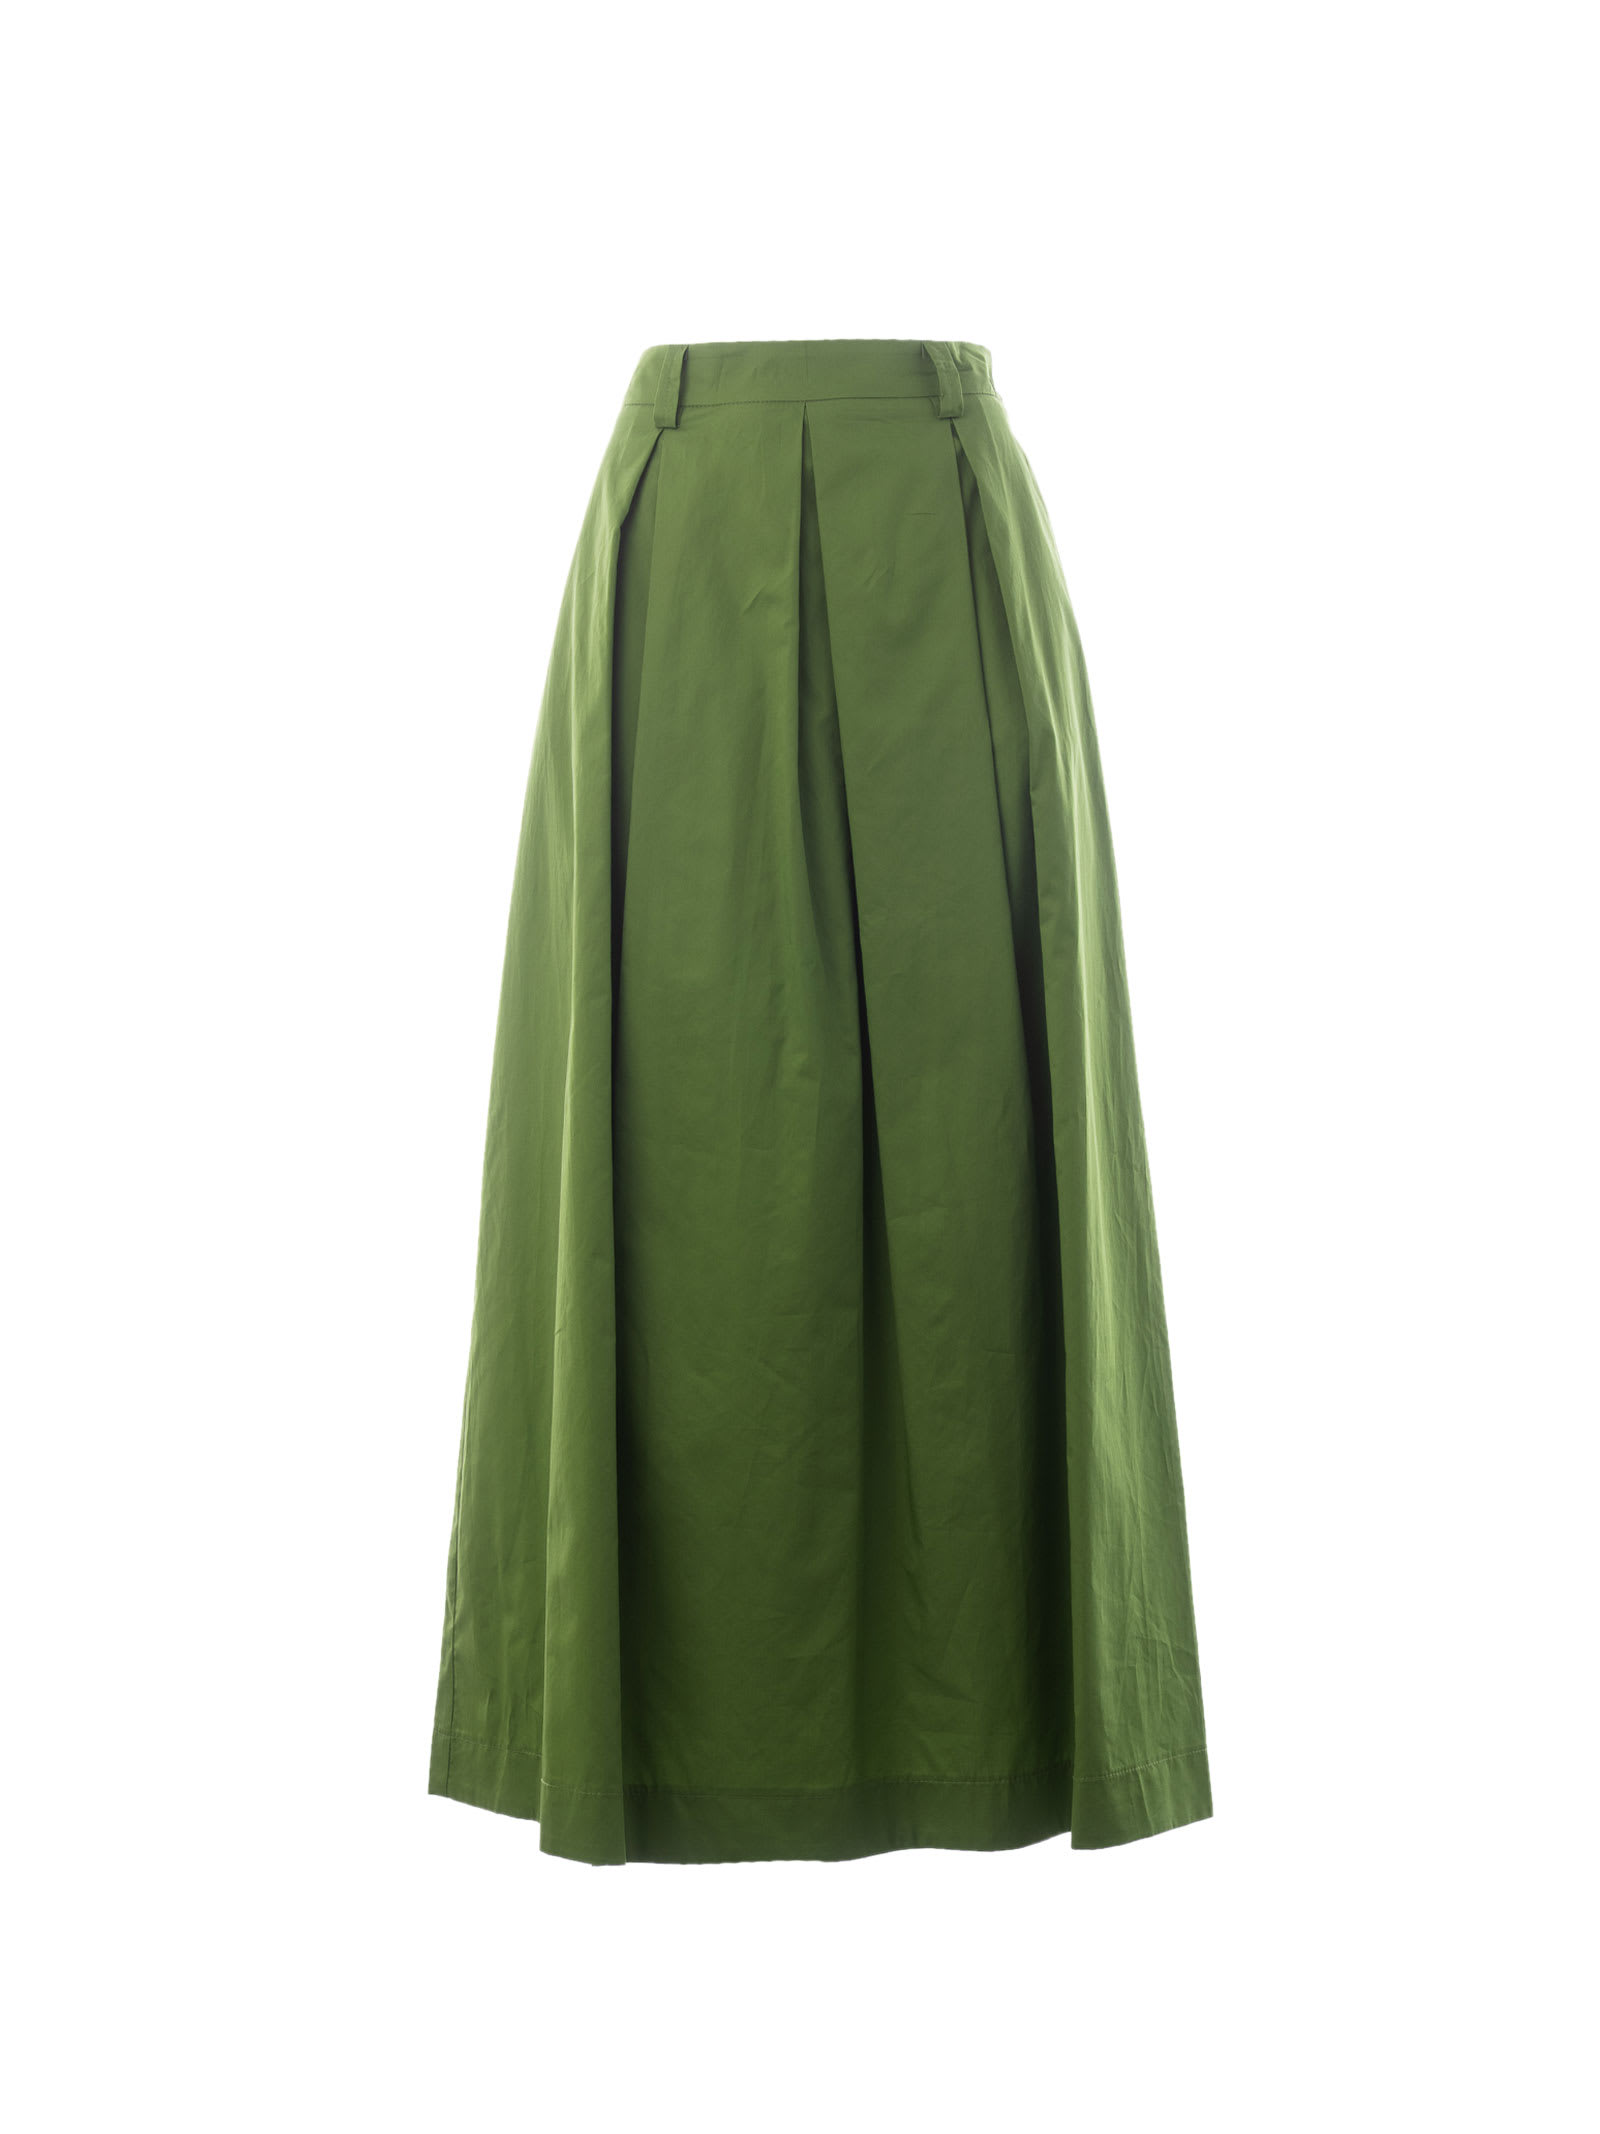 Kaos Long Green Wide Skirt